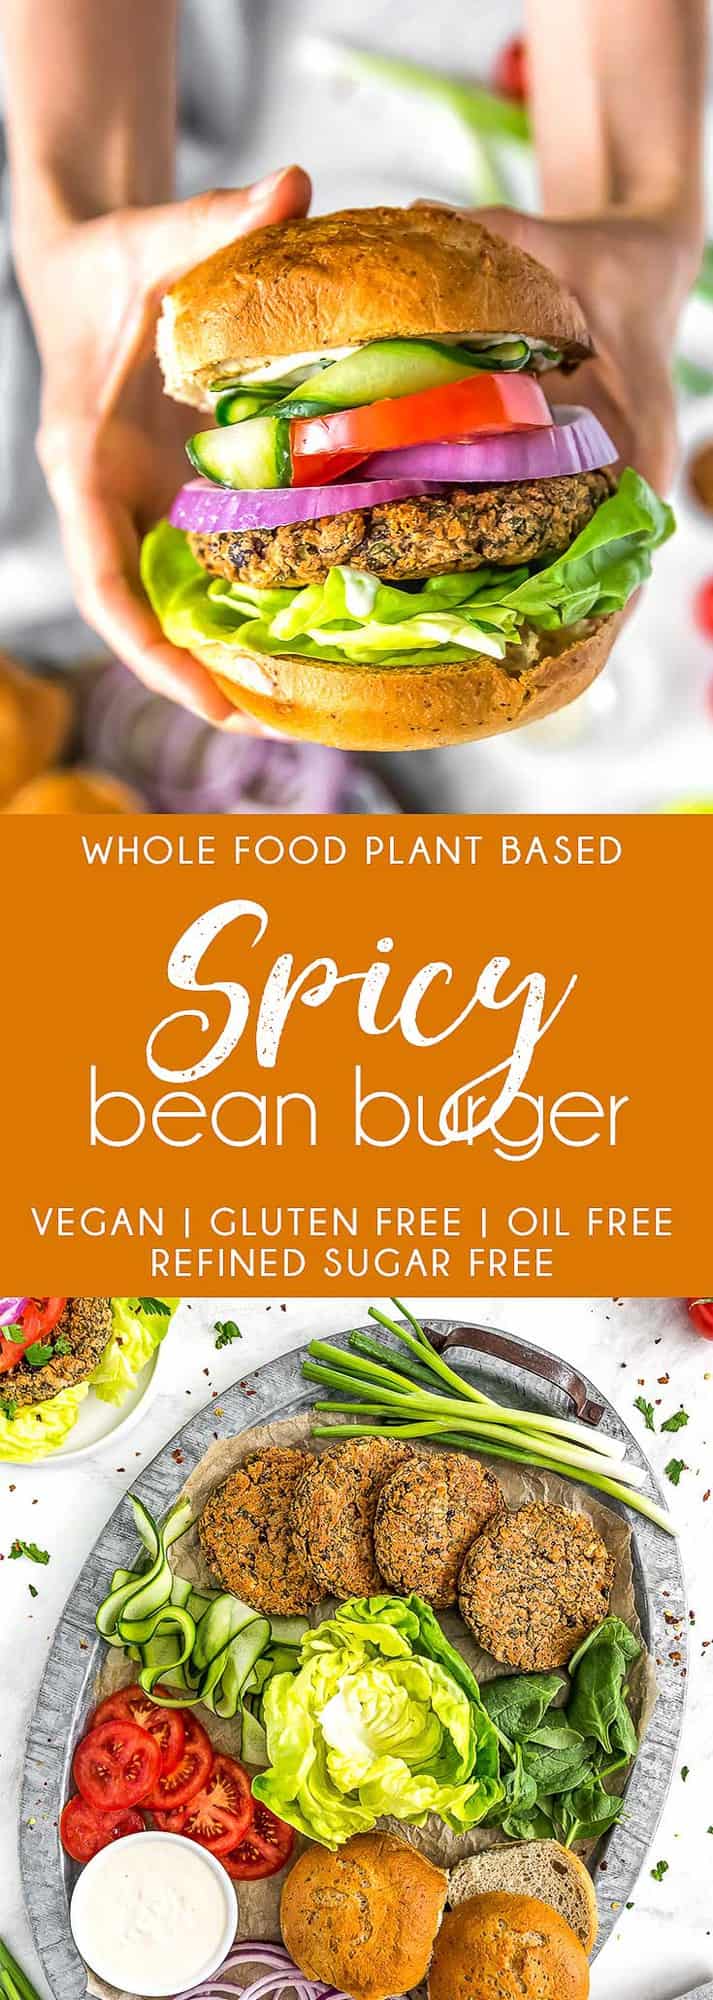 Spicy Bean Burger, Vegan burger, bean burger, vegan bean burger, vegan bean, burger, plant based burger, plant based, vegan, vegetarian, whole food plant based, gluten free, recipe, wfpb, healthy, healthy vegan, oil free, no refined sugar, no oil, refined sugar free, dairy free, dairy, dinner, lunch, healthy recipe